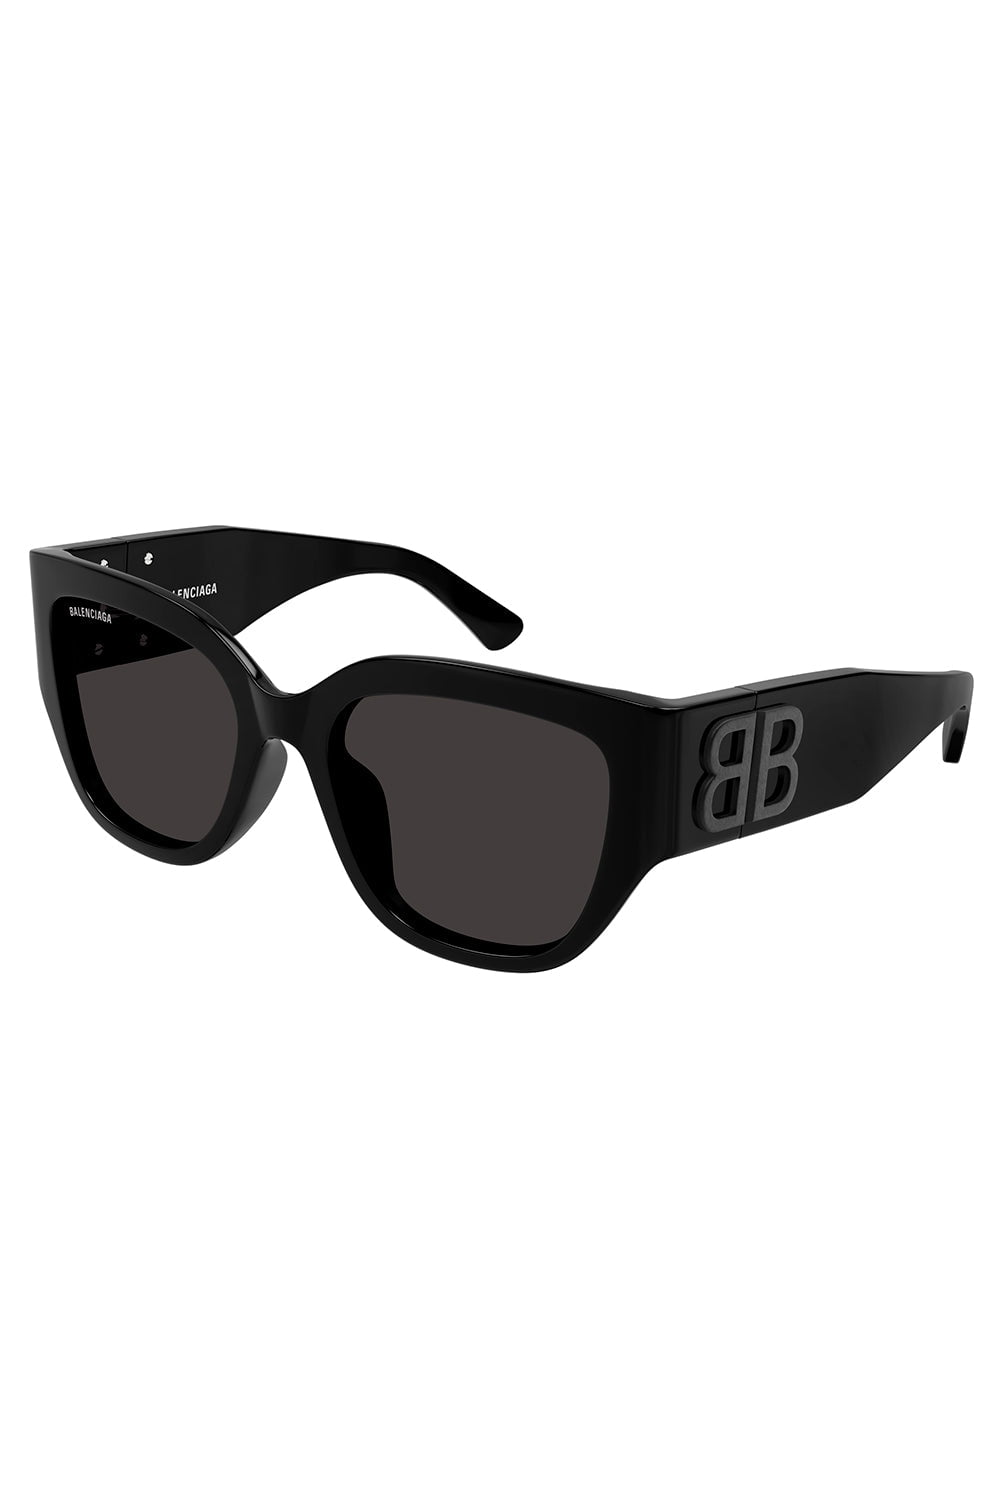 BALENCIAGA-Bossy Sunglasses-BLACK/GREY